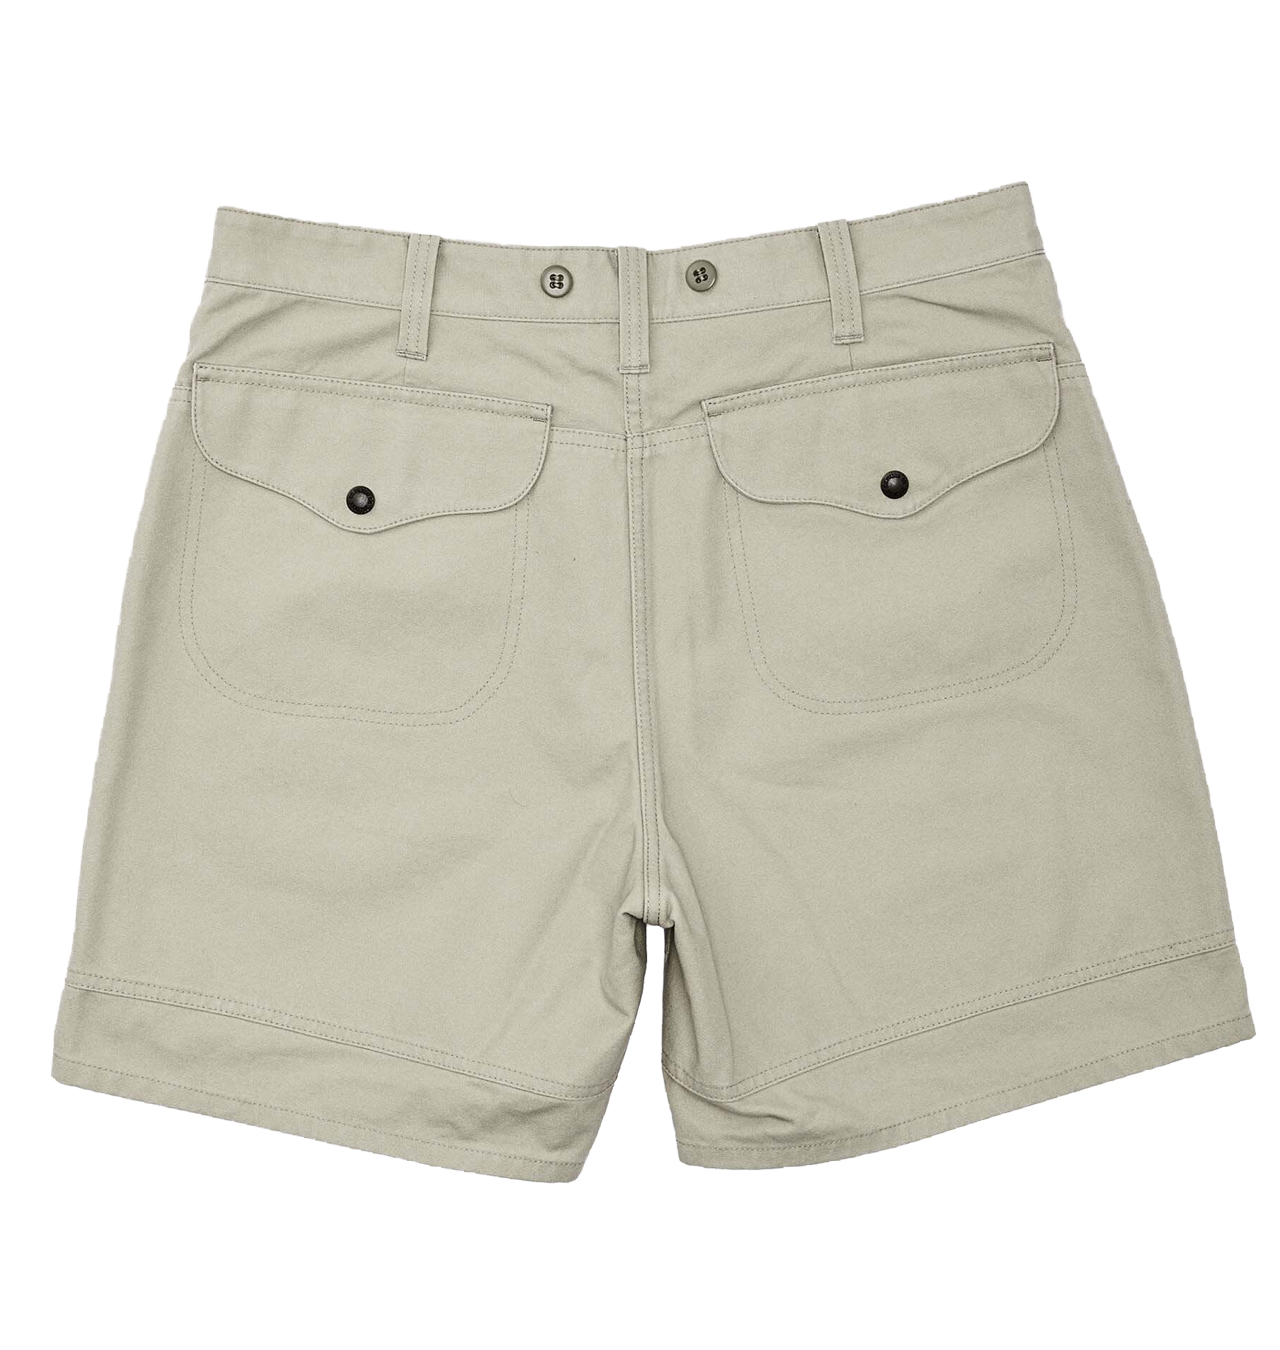 Filson - Dry Tin Shorts - Surplus Tan